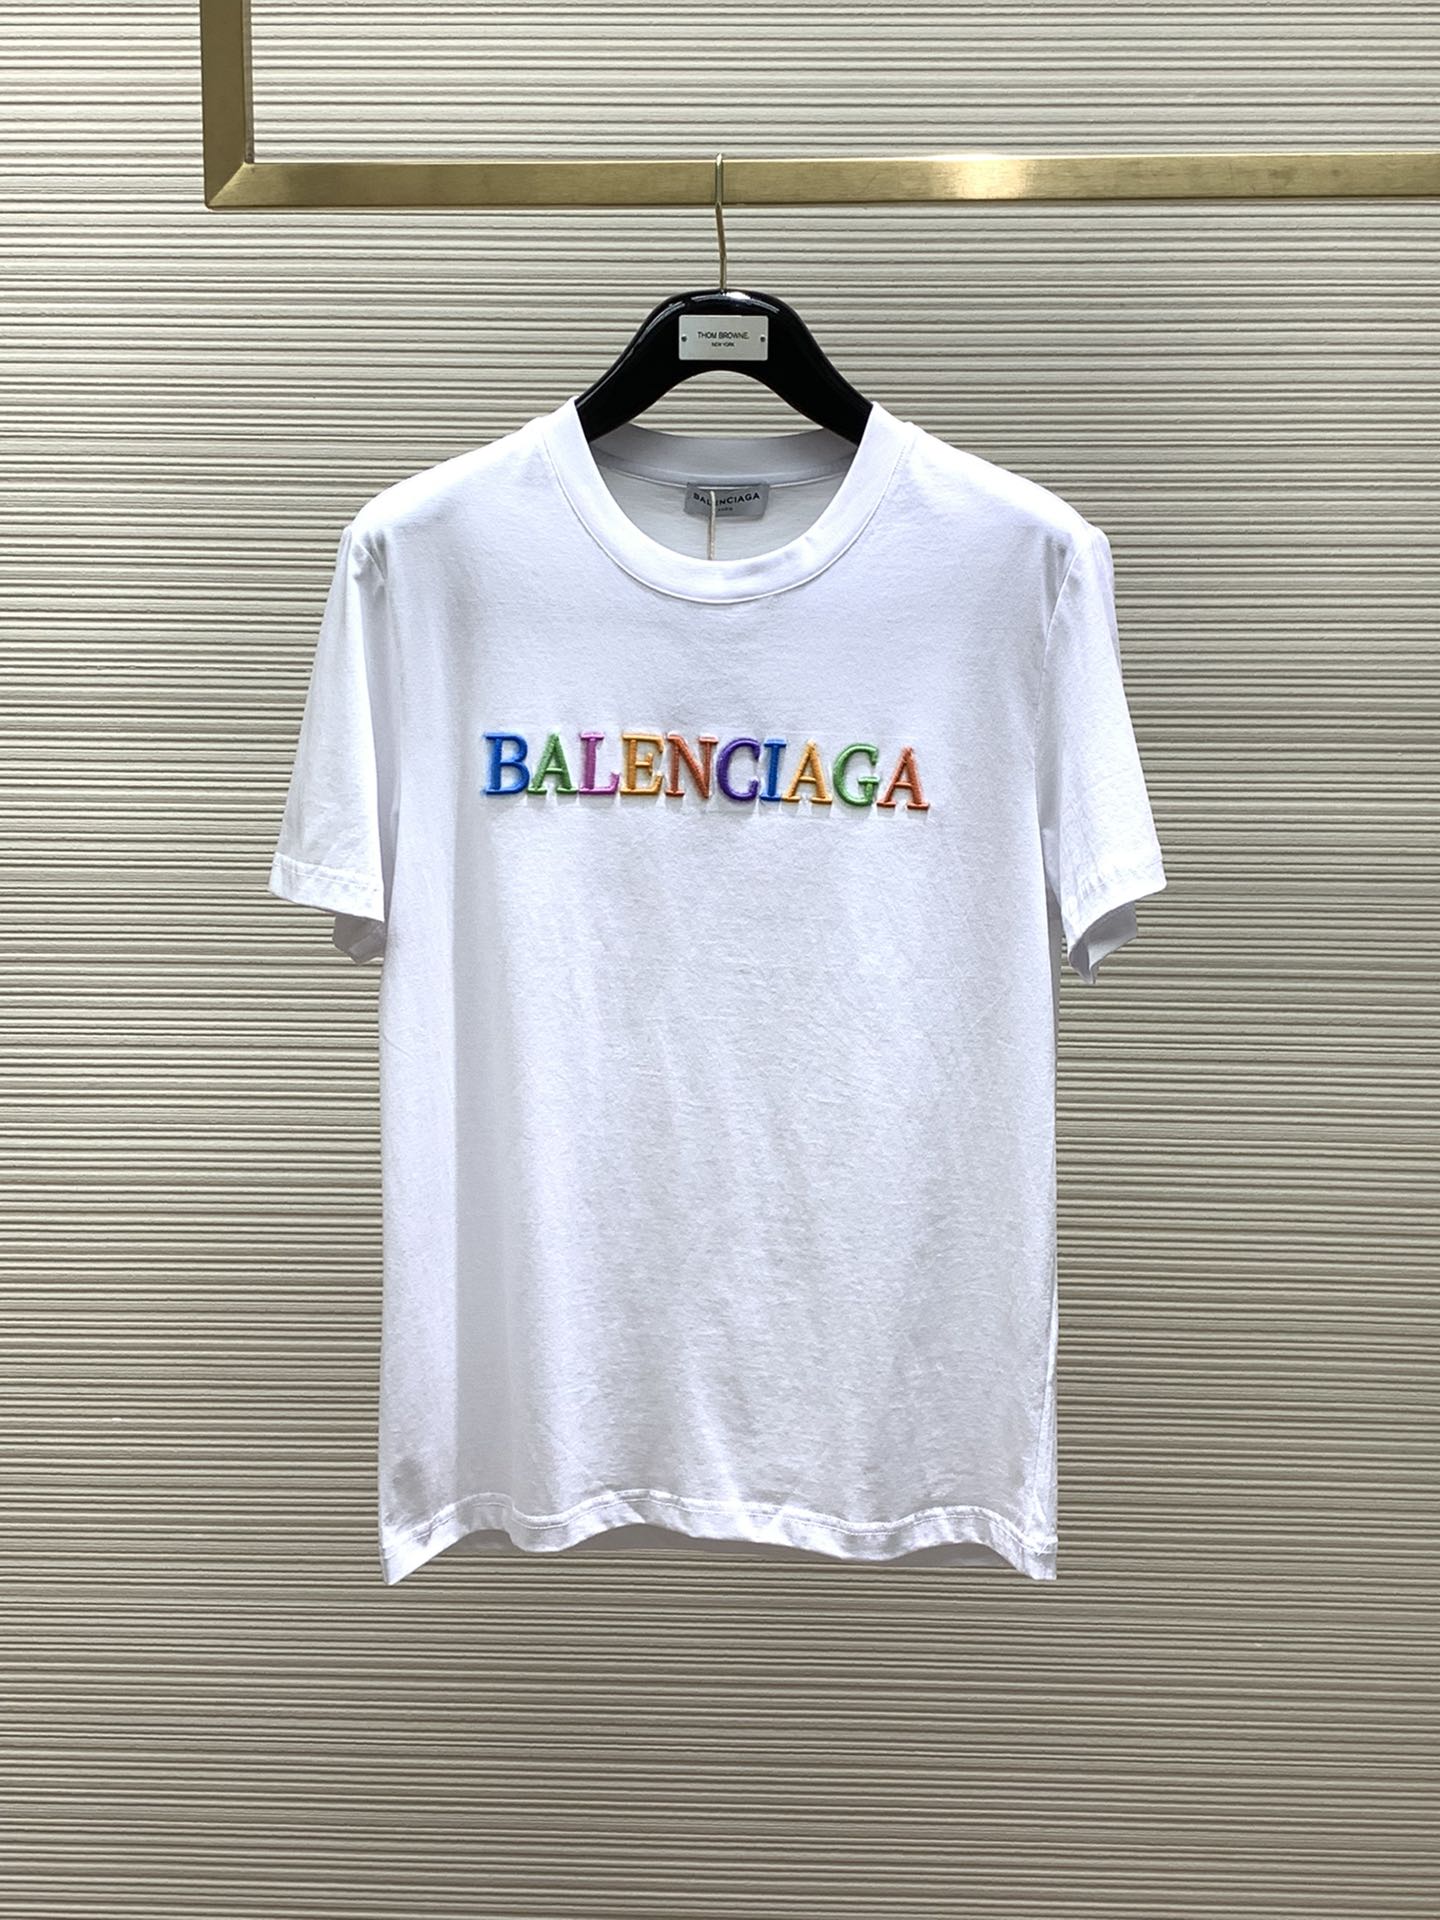 Balenciaga Clothing T-Shirt Embroidery Summer Collection Fashion Short Sleeve